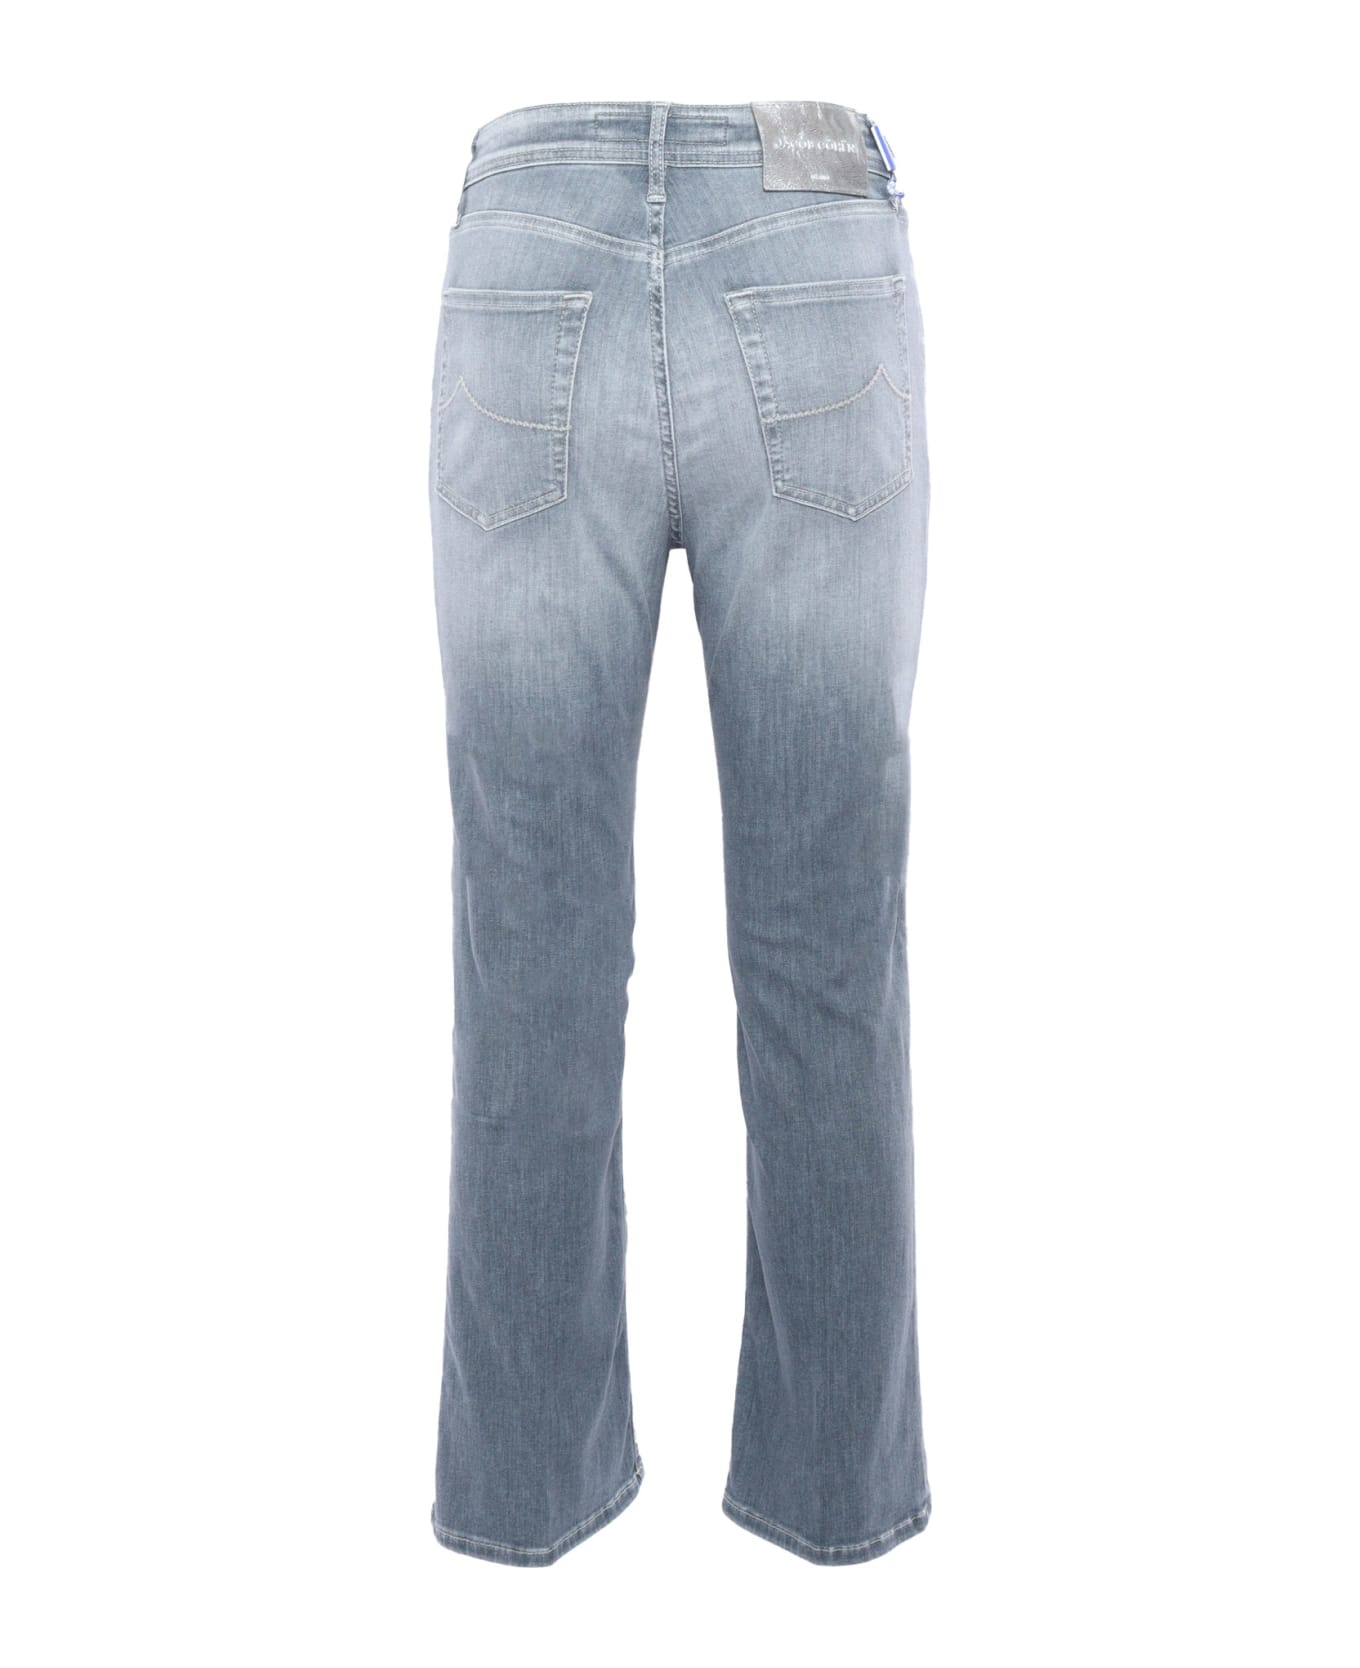 Jacob Cohen Gray 5 Pocket Jeans - GREY